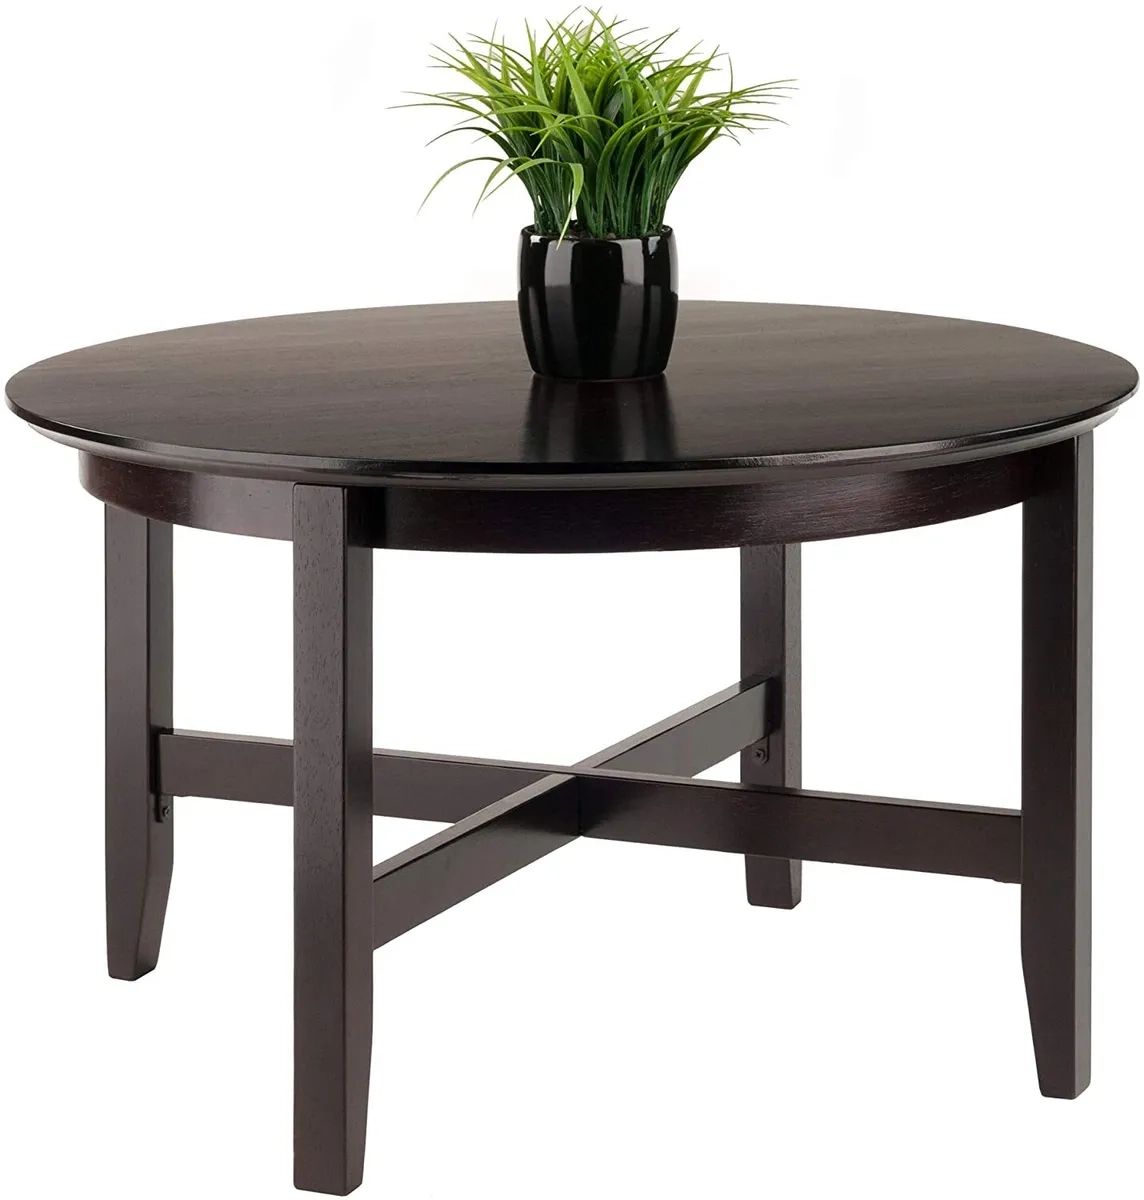 30" Solid Wood Round Coffee Table Modern Living Room Furniture Espresso  Finish | Ebay Regarding Espresso Wood Finish Coffee Tables (View 15 of 15)